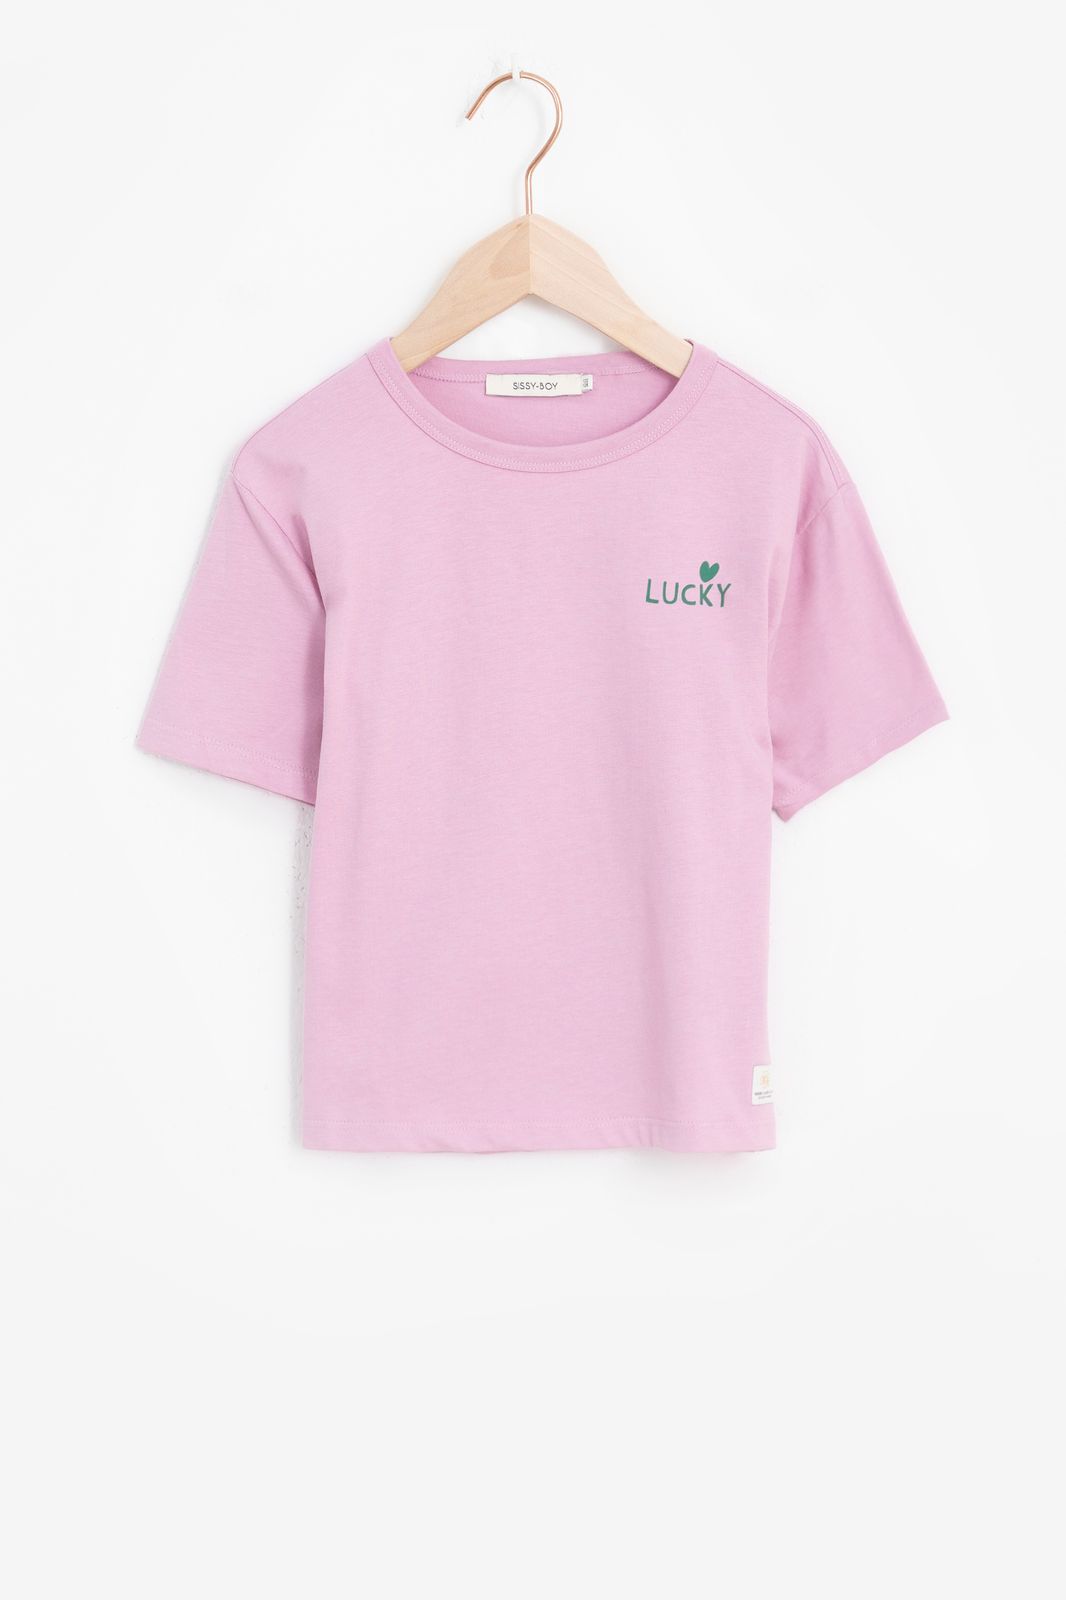 Roze T-shirt met lucky print - Kids | Sissy-Boy